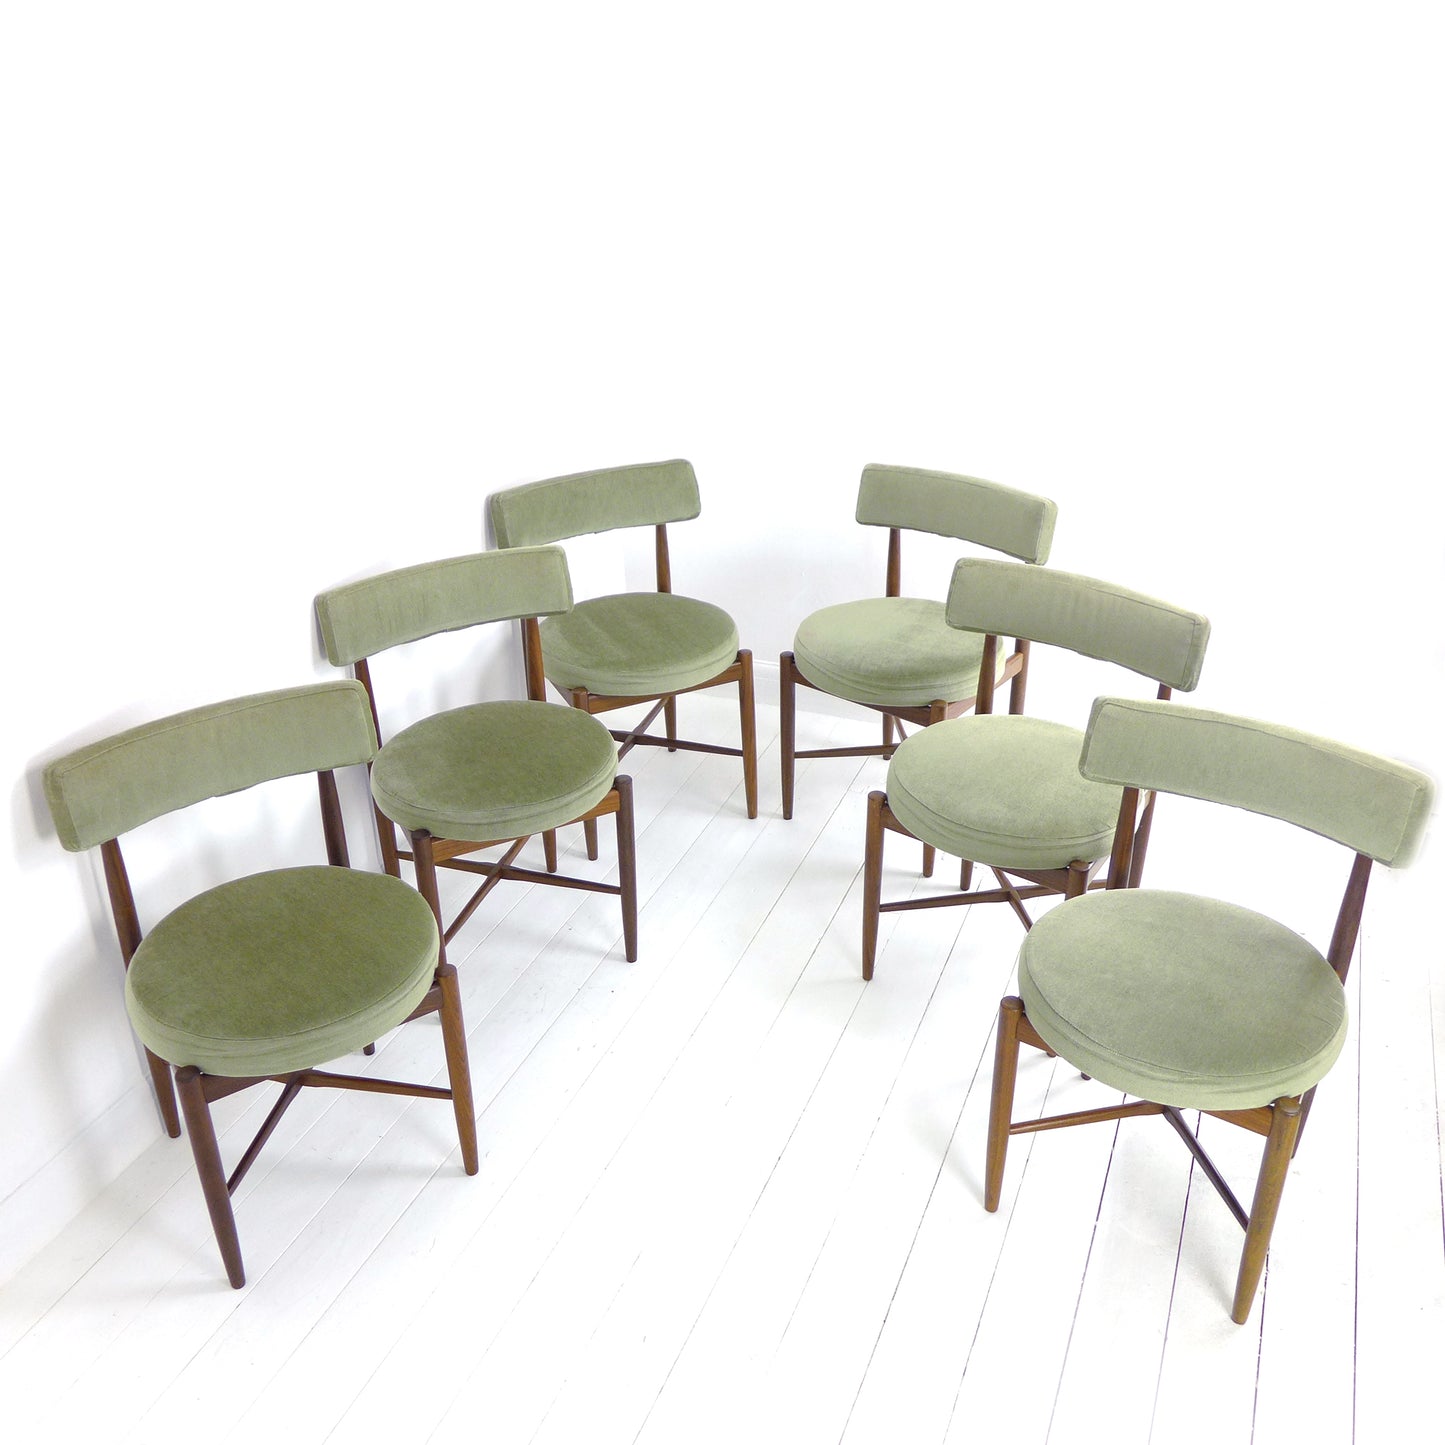 Vintage G PLAN Dining Chairs x6 Kofod Larsen - Original Velvet Upholstery - Mid Century Teak Set of 6